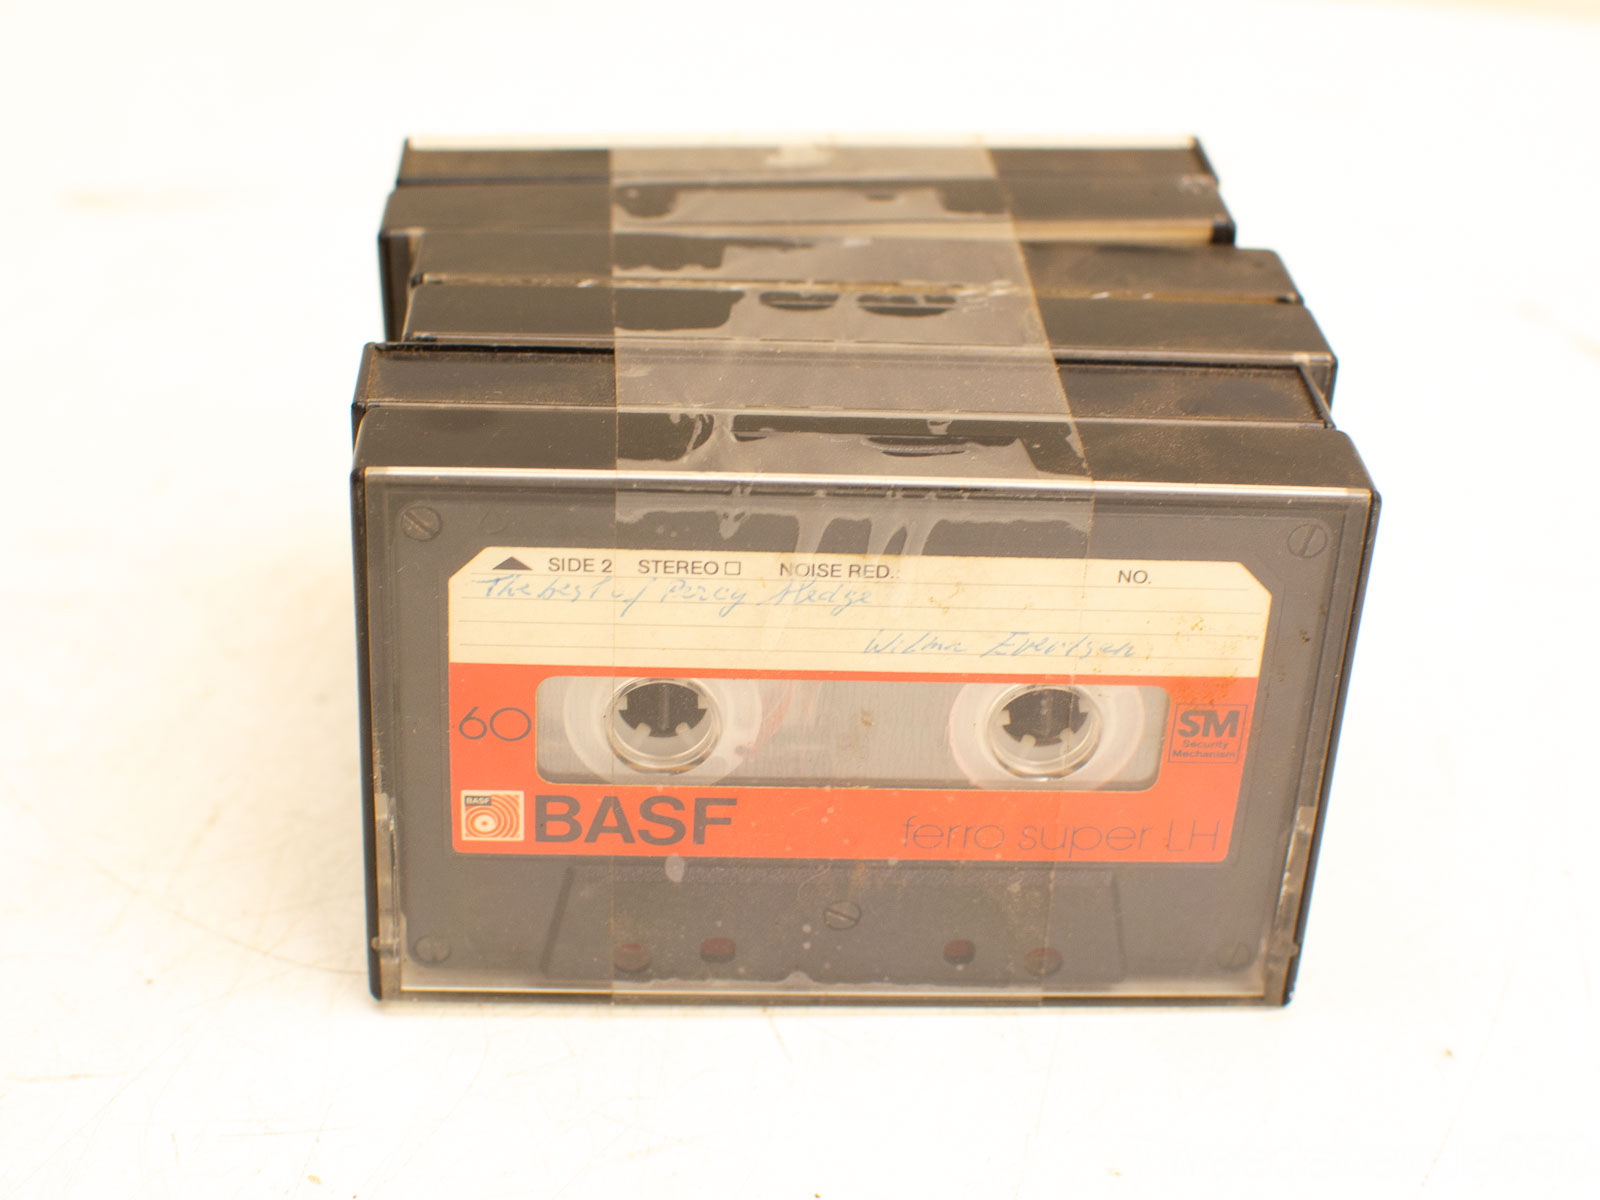 6 Basf cassettebandjes 31248